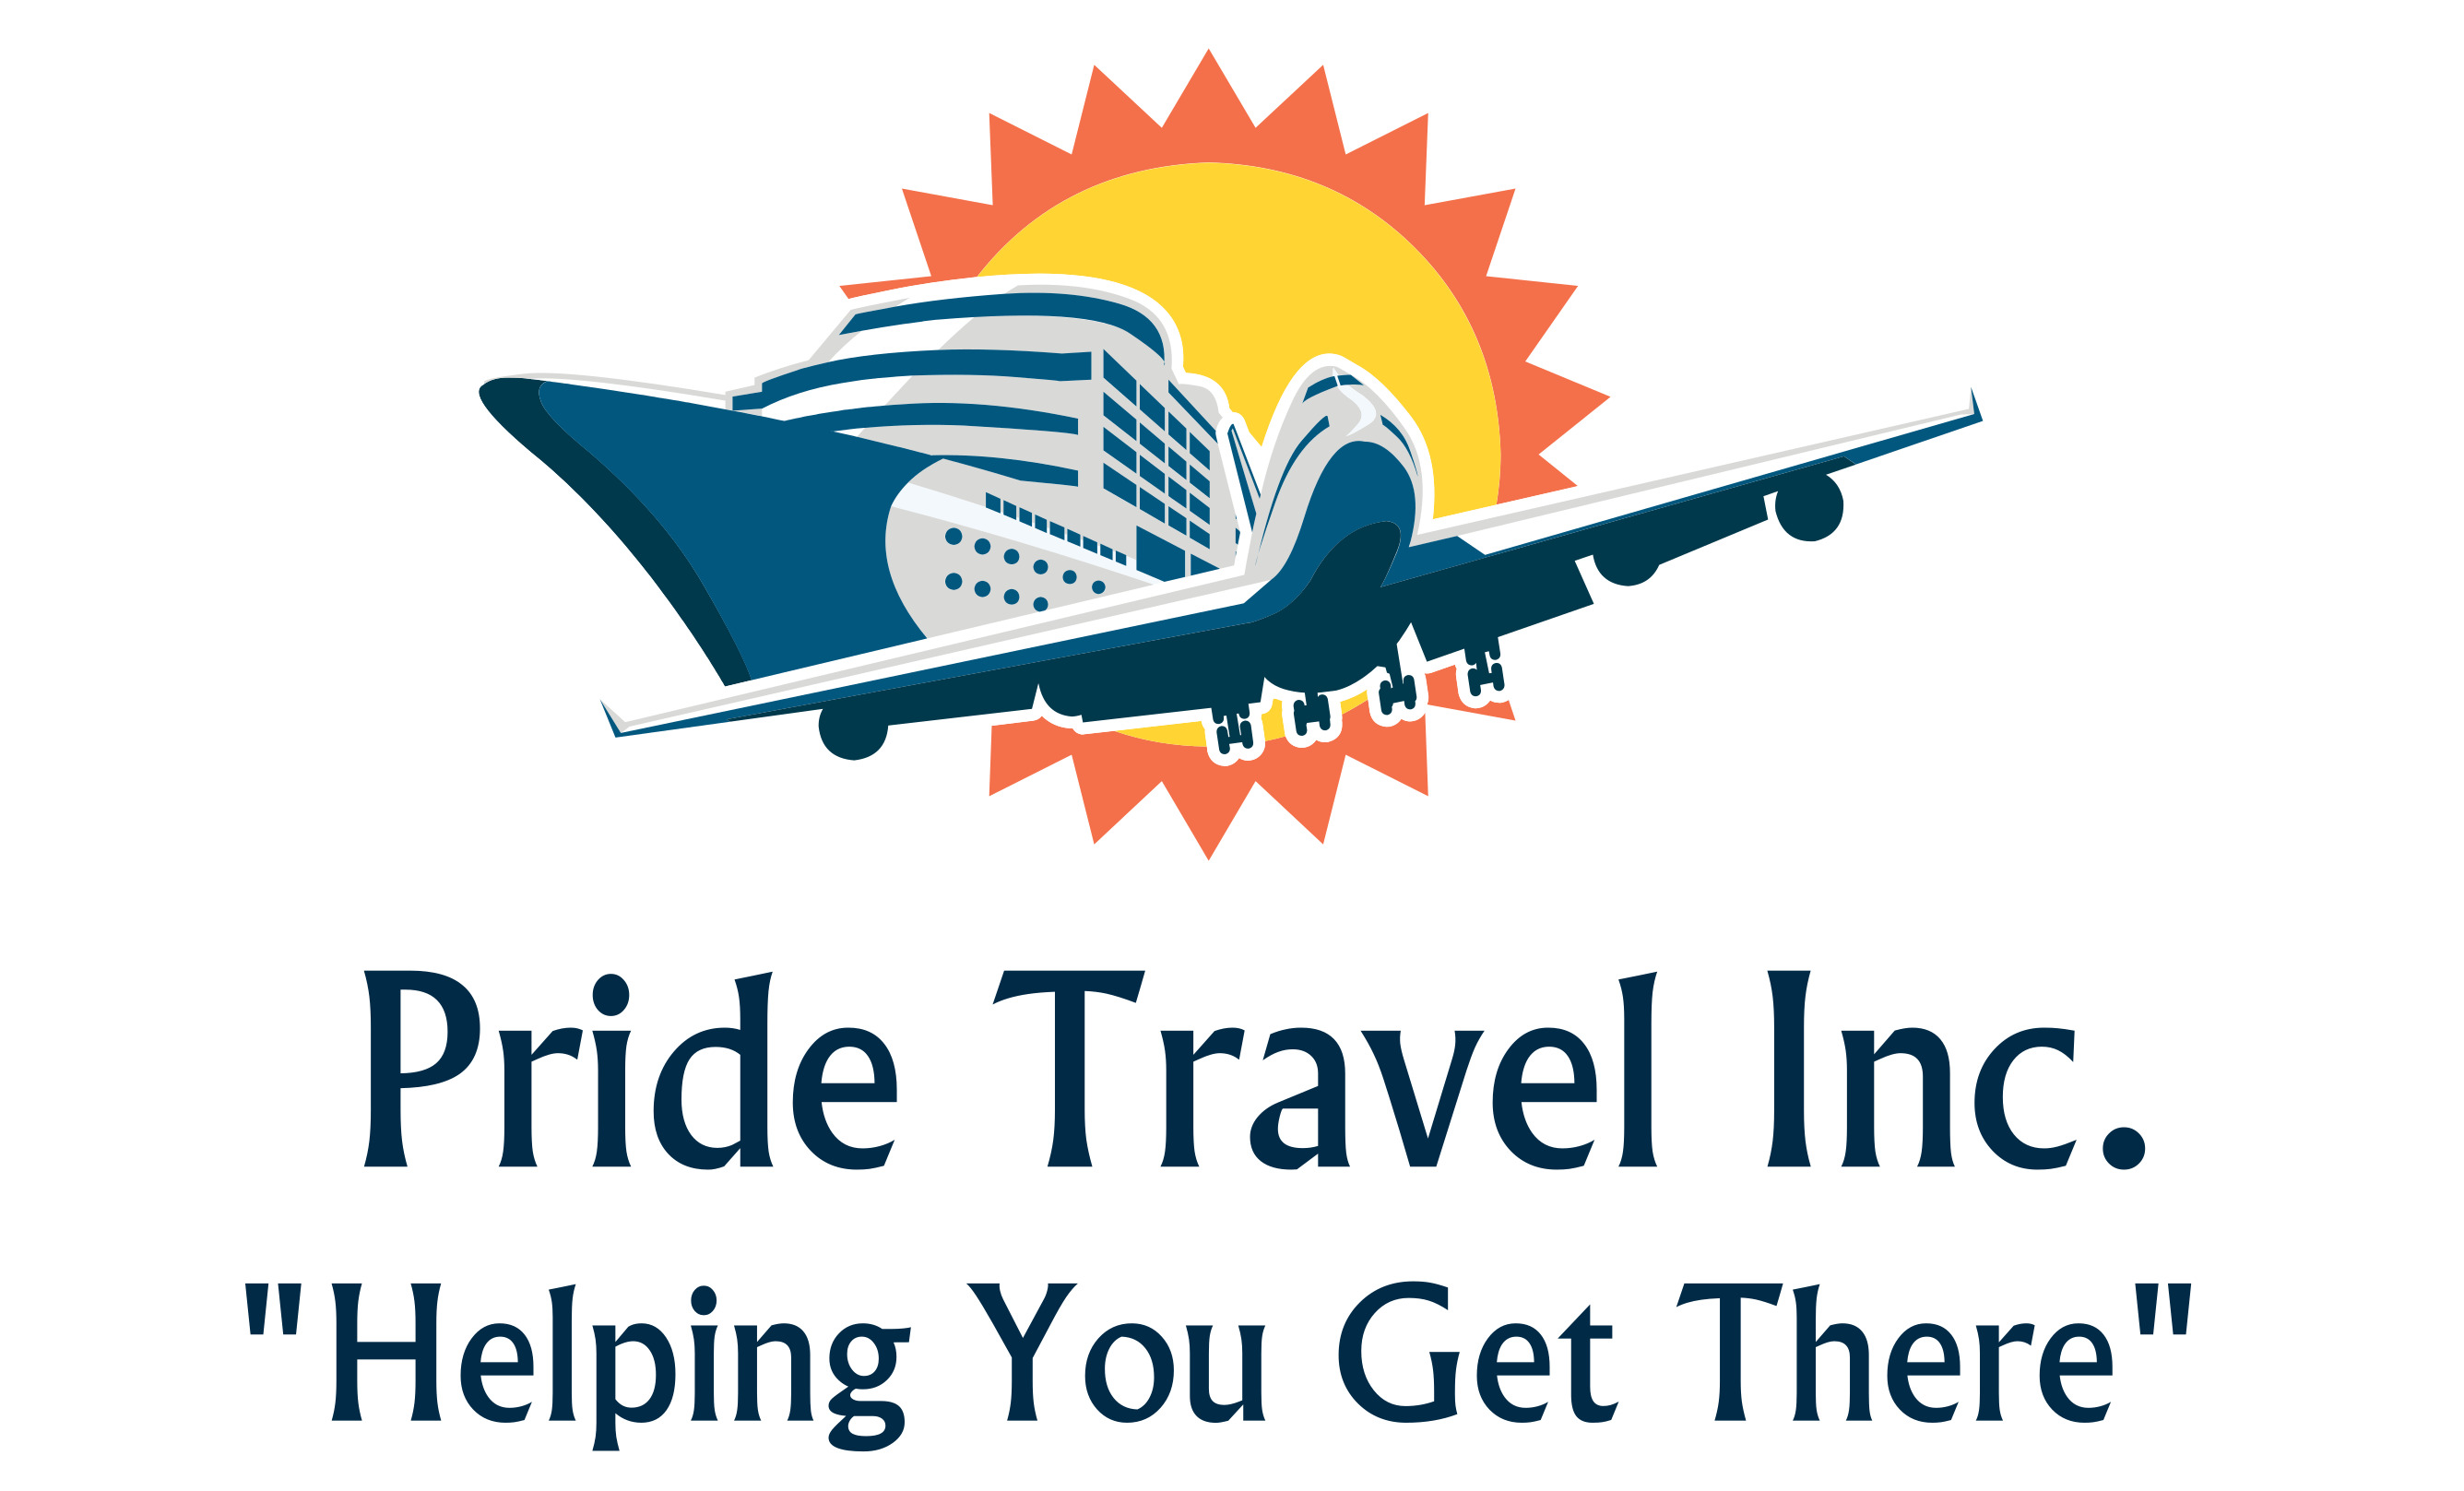 Pride Travel Inc